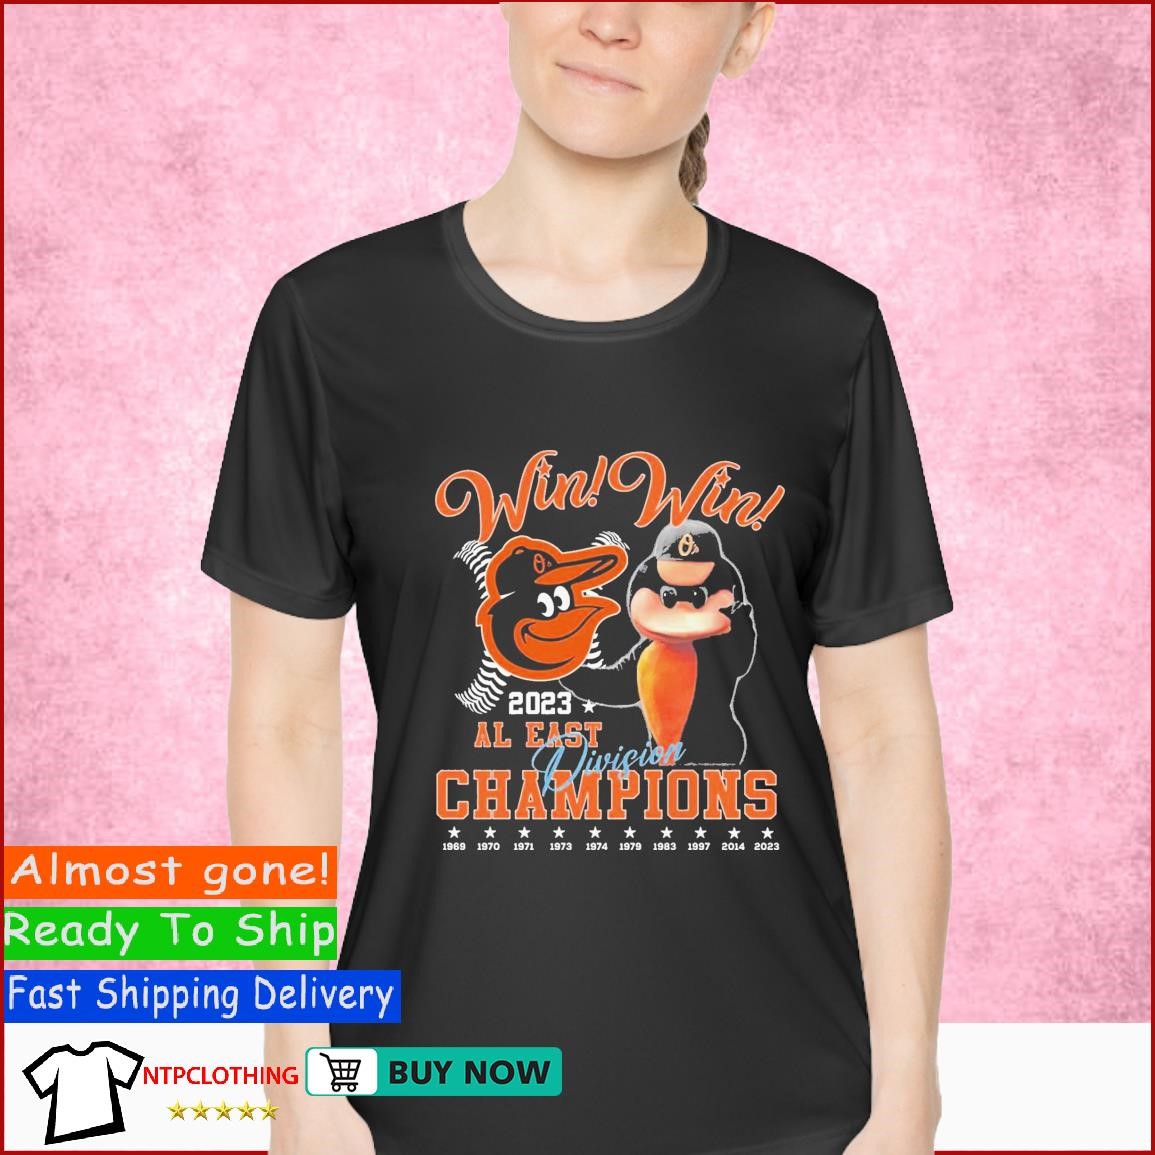 MLB Baltimore Orioles Boys' V-Neck T-Shirt - XS